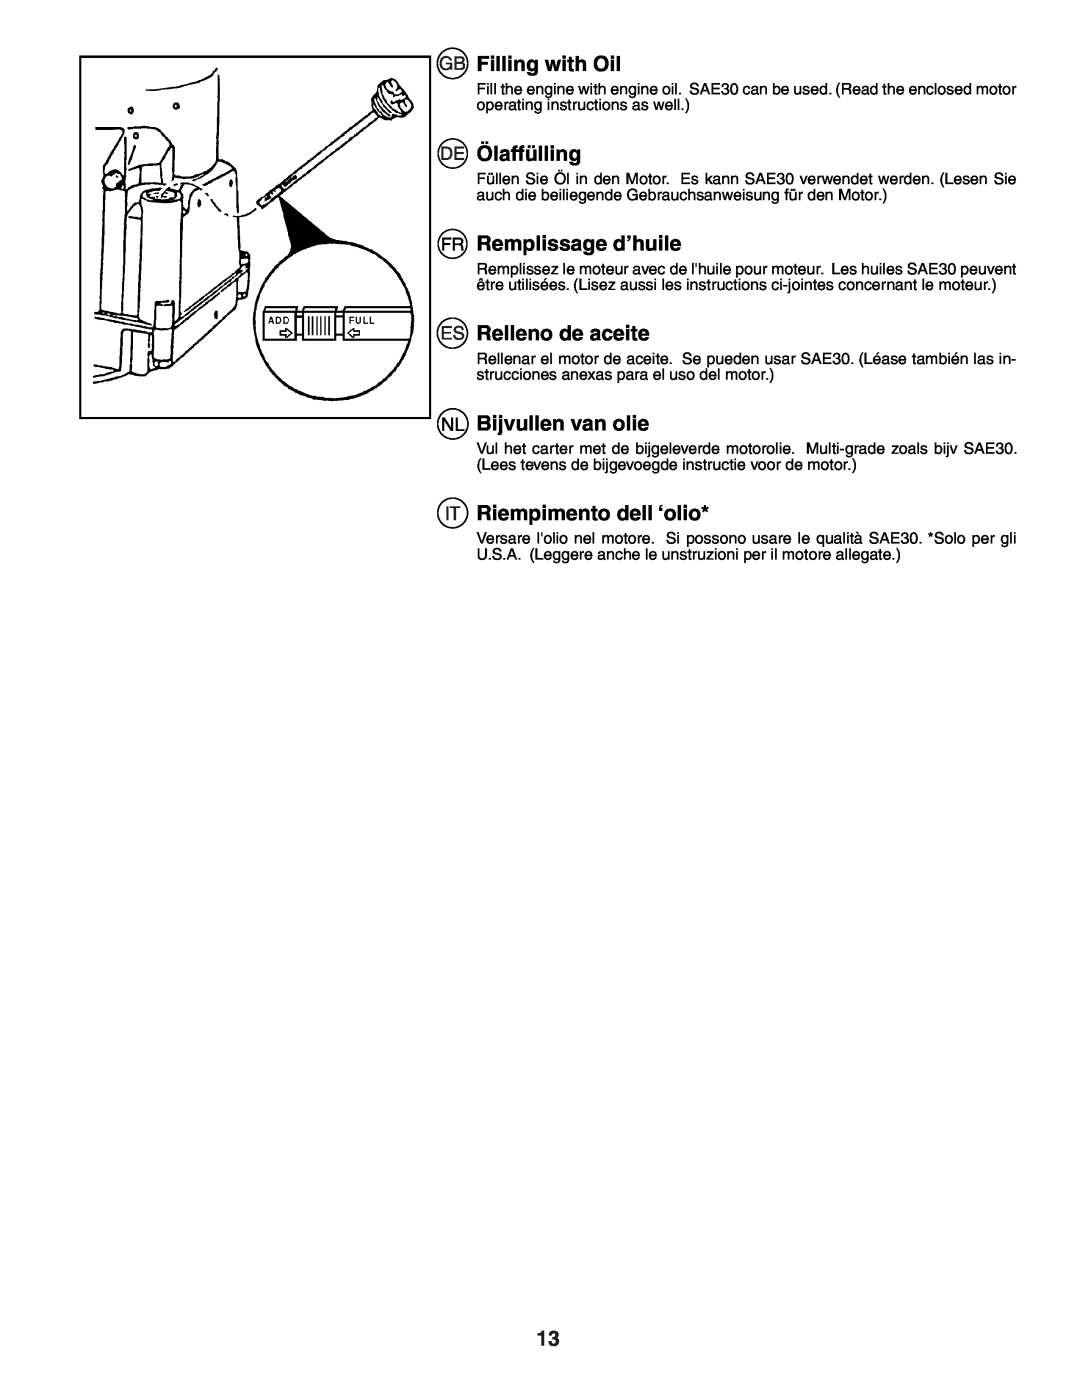 Husqvarna J50 instruction manual Filling with Oil, Ölaffülling, Remplissage d’huile, Relleno de aceite, Bijvullen van olie 